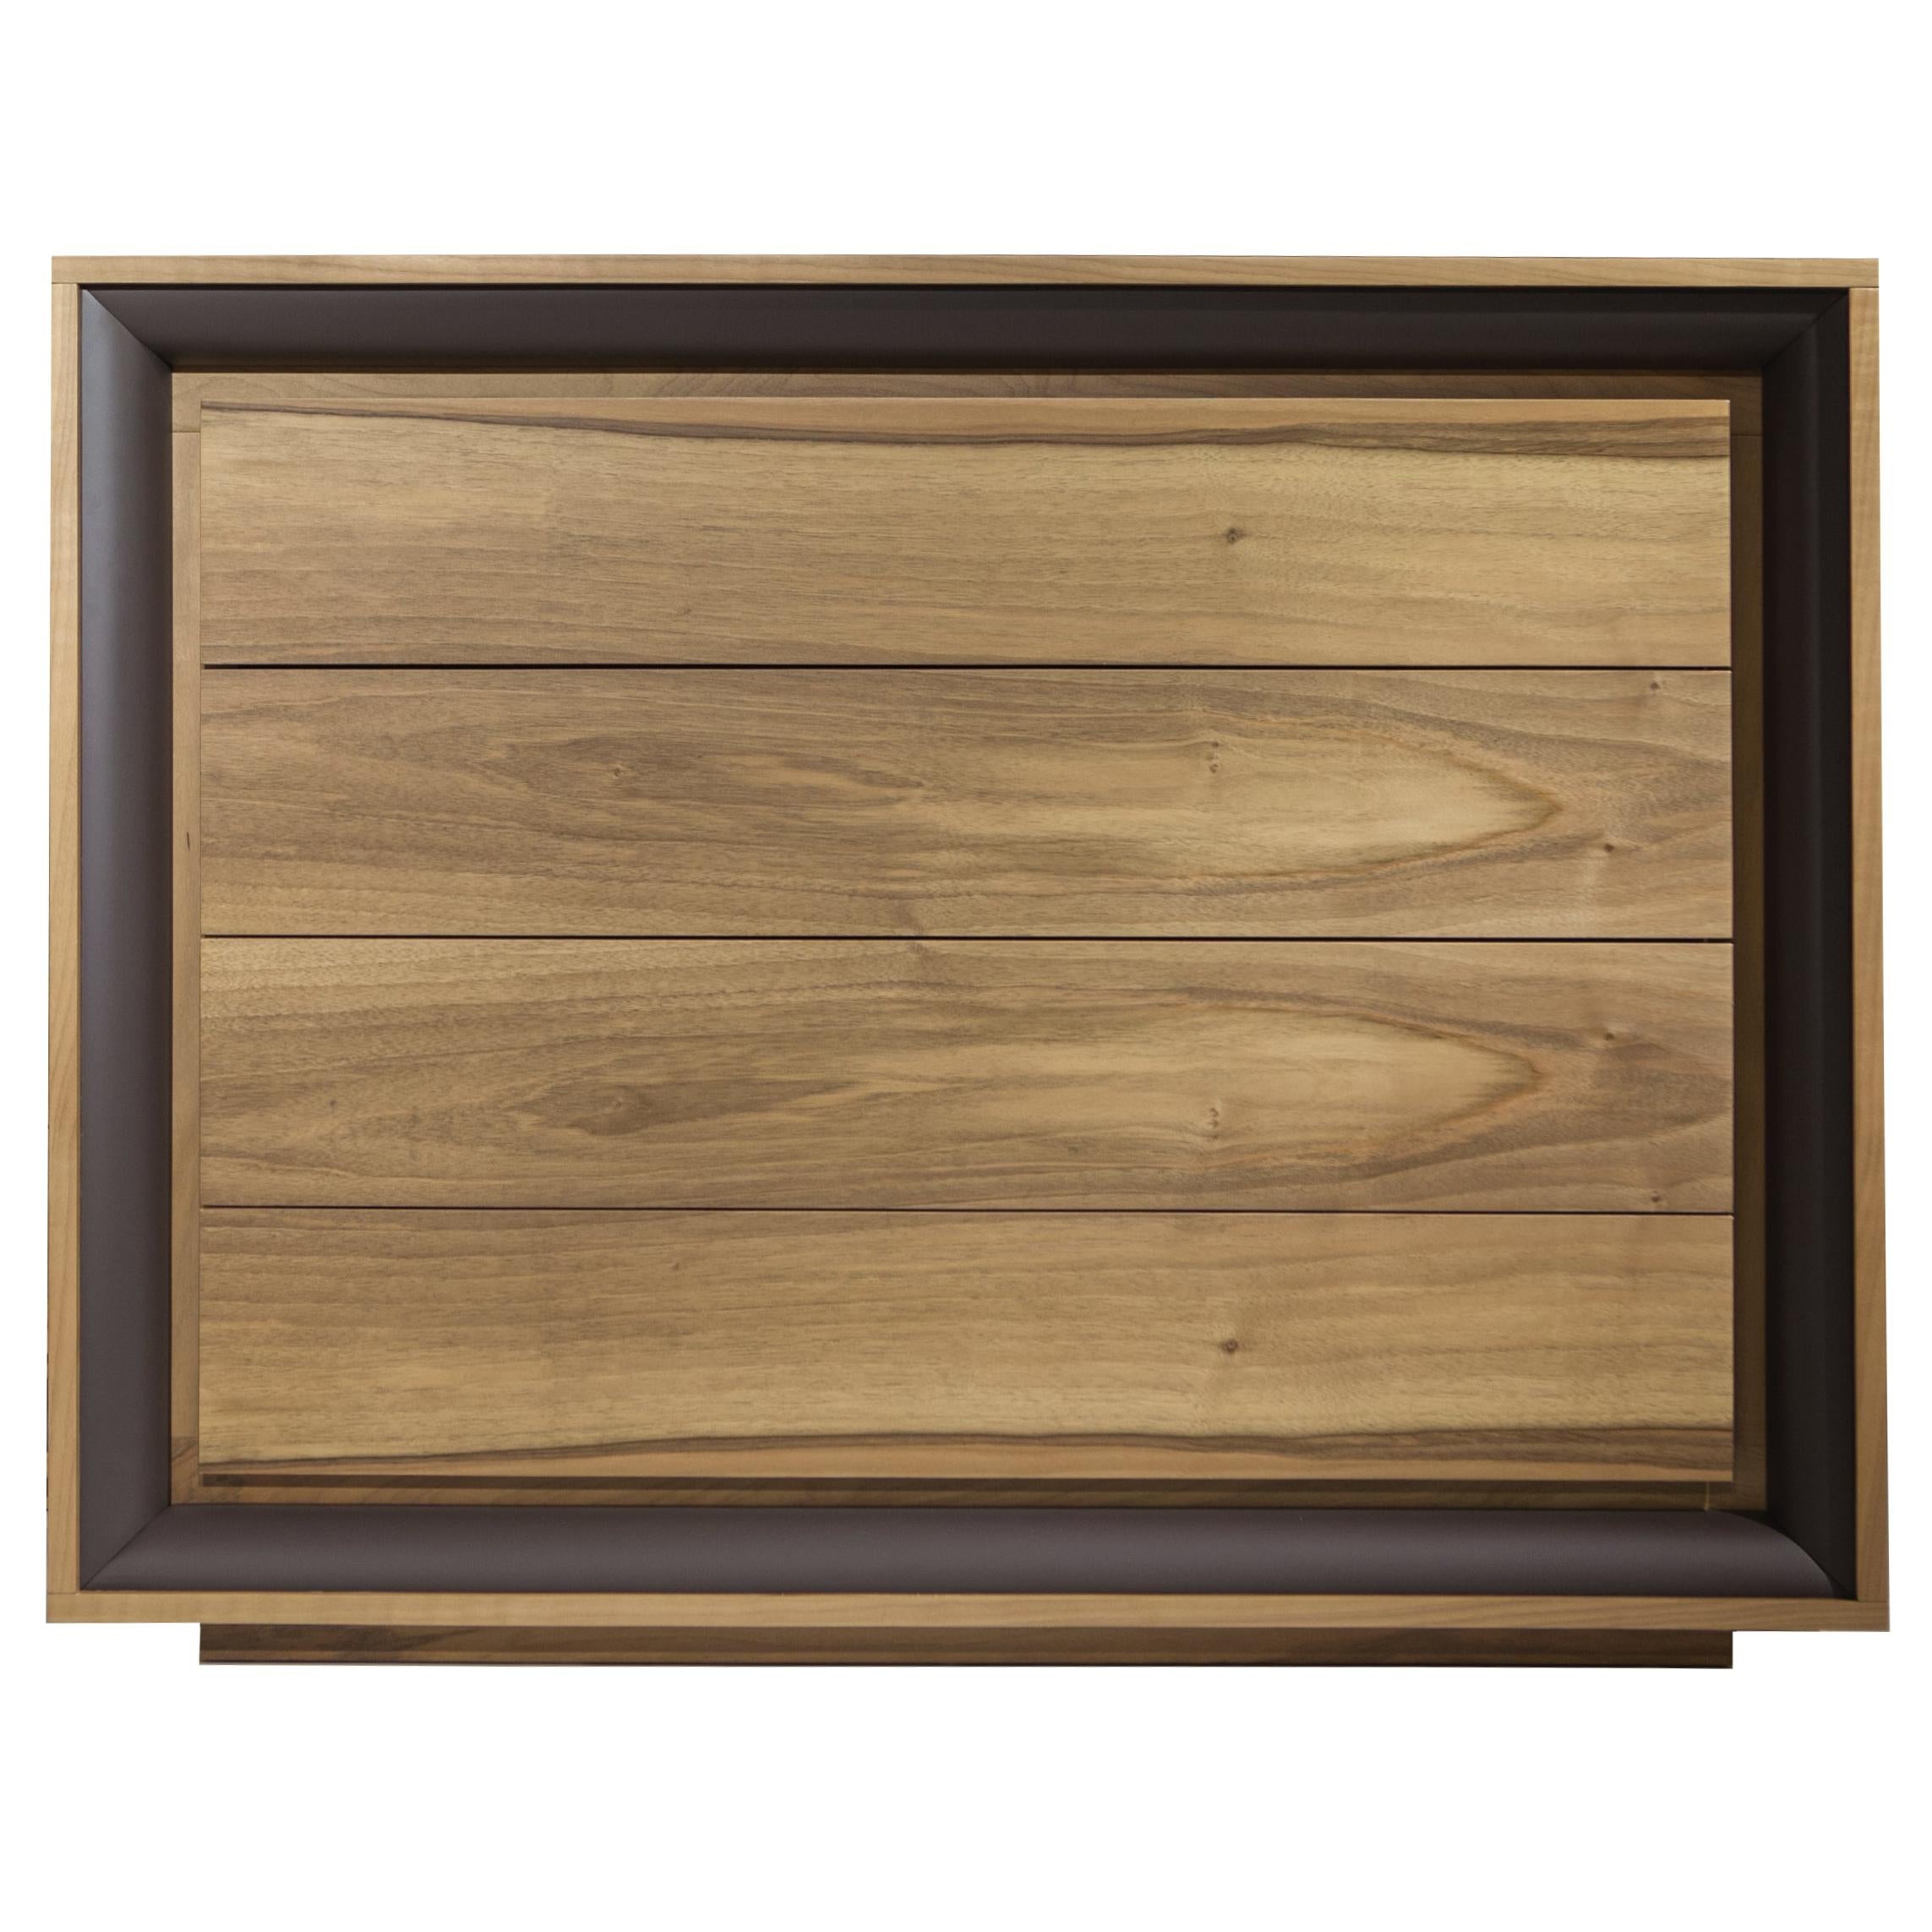 Oslo Dresser, Solid Walnut Wood with Brown Leather Border Bedroom Dresser For Sale